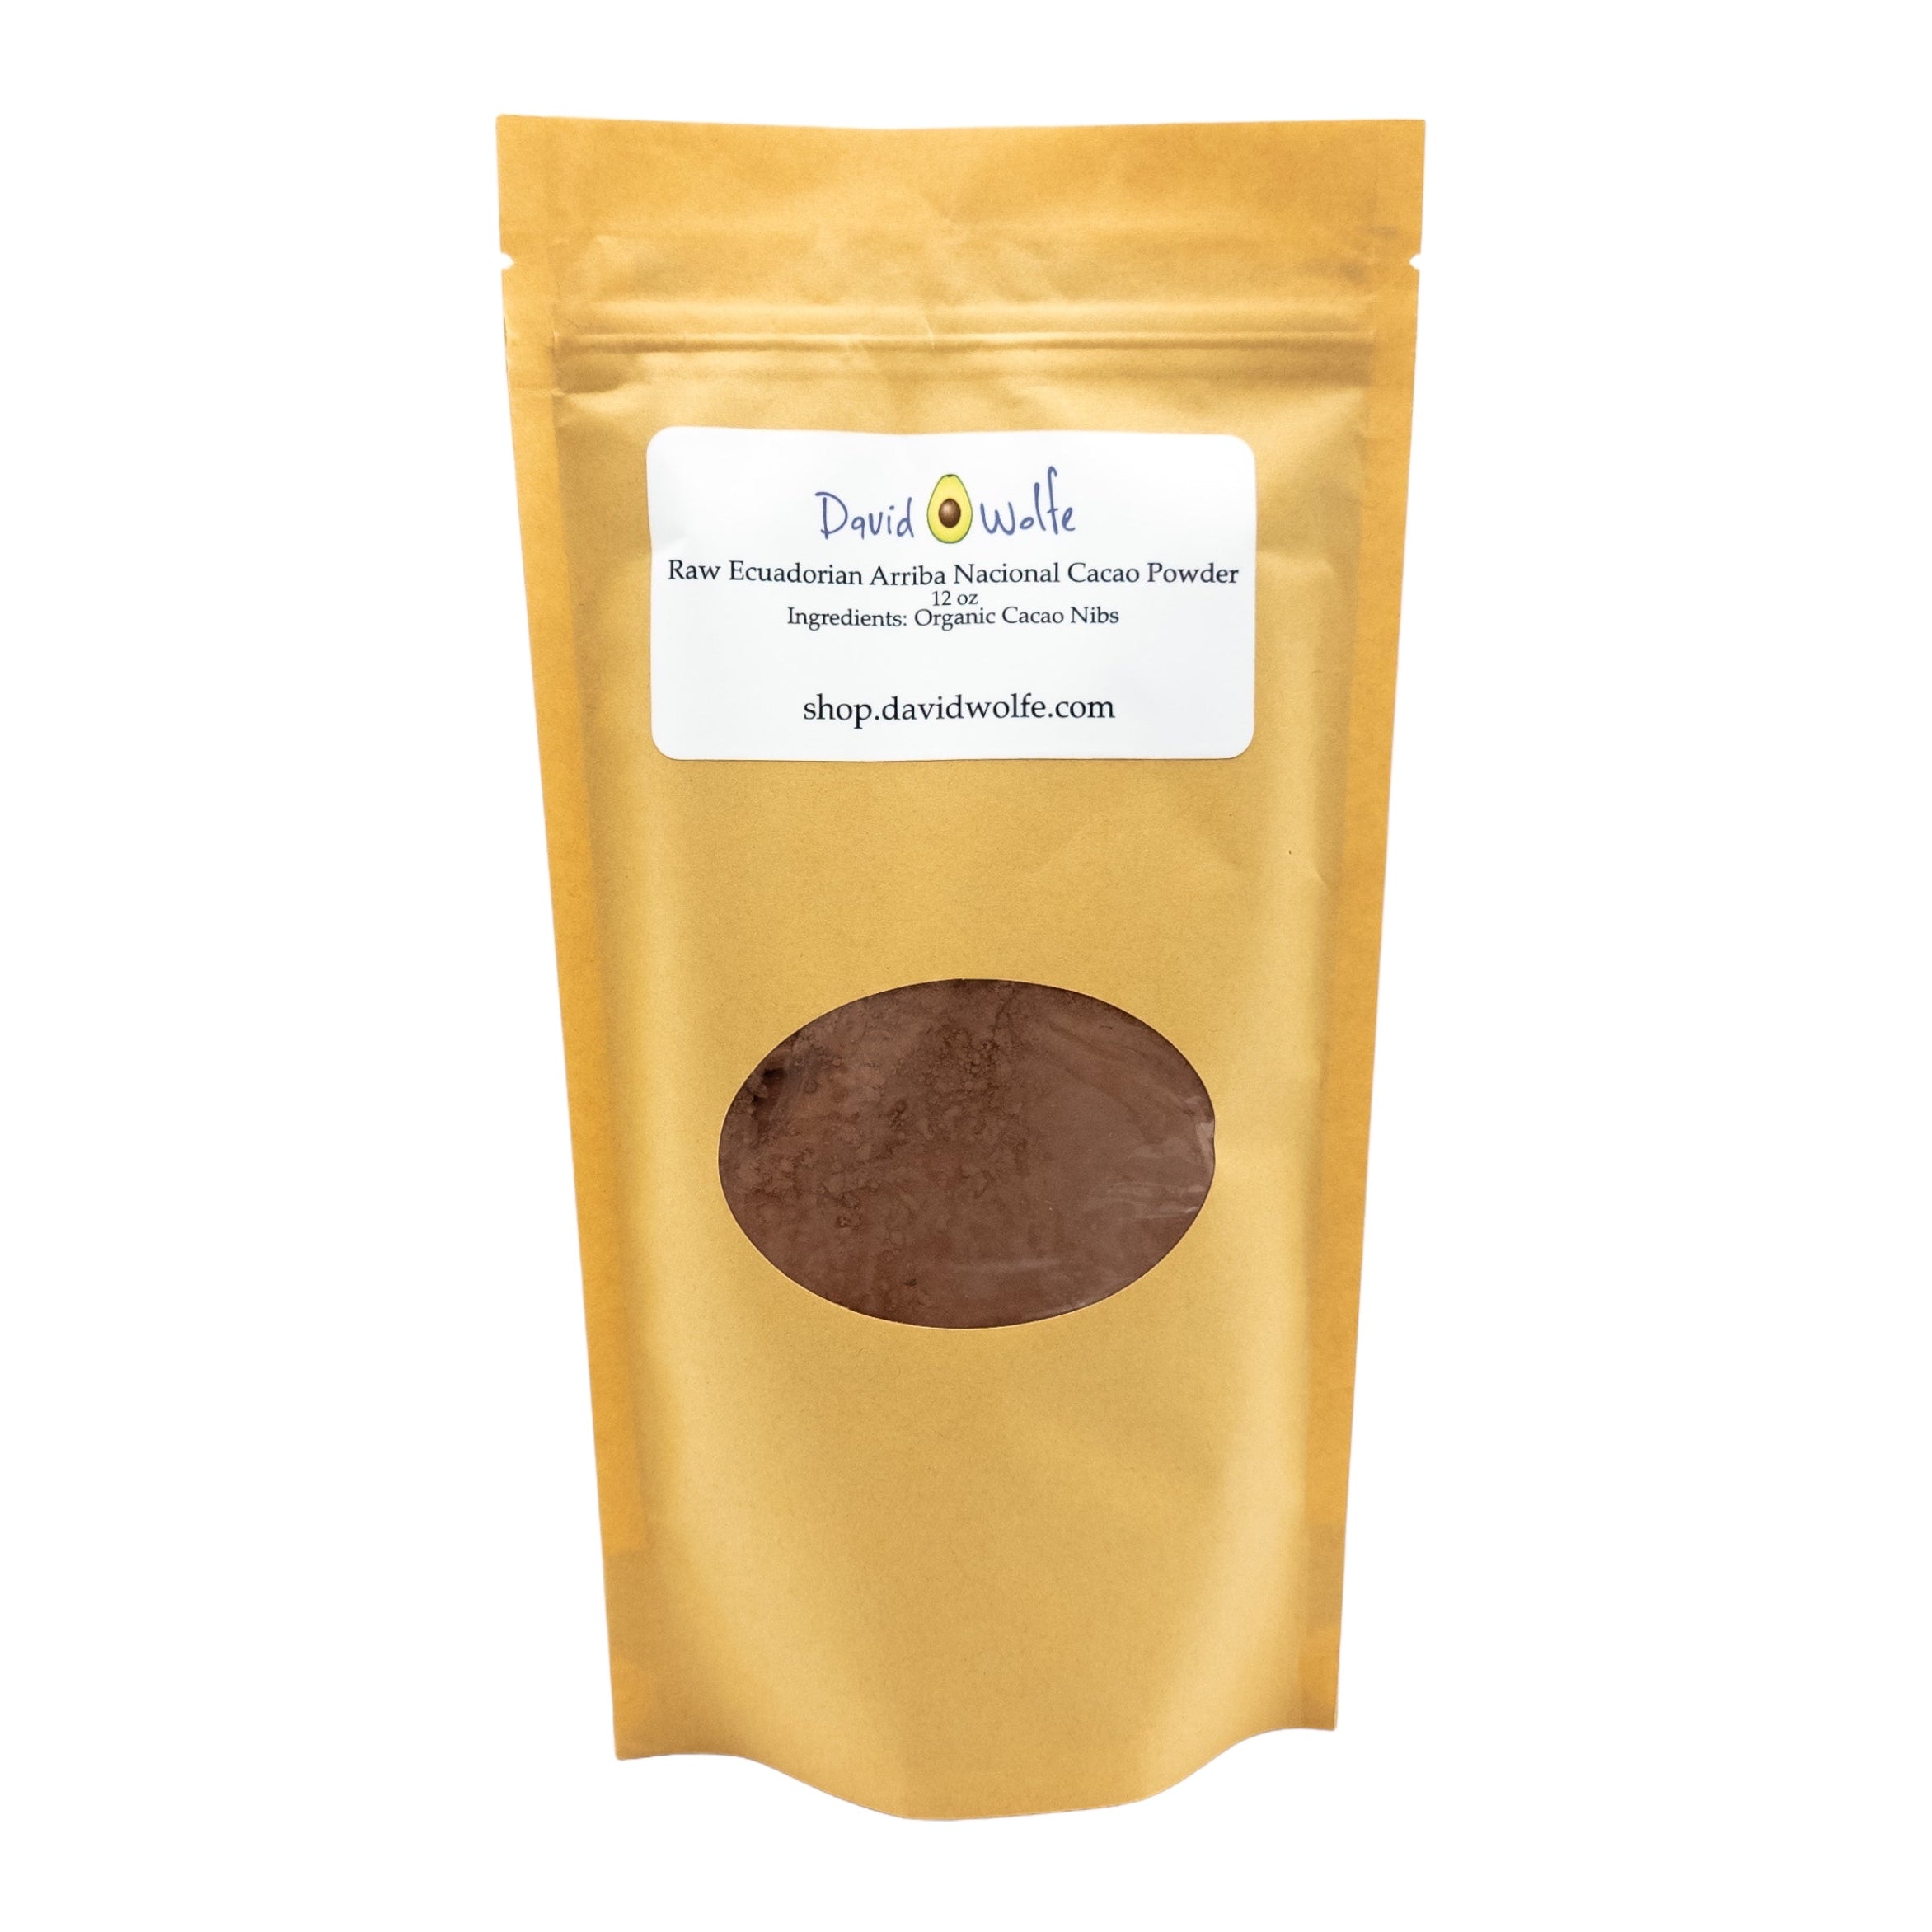 Poudre de cacao naturelle – dioulmaker commodities